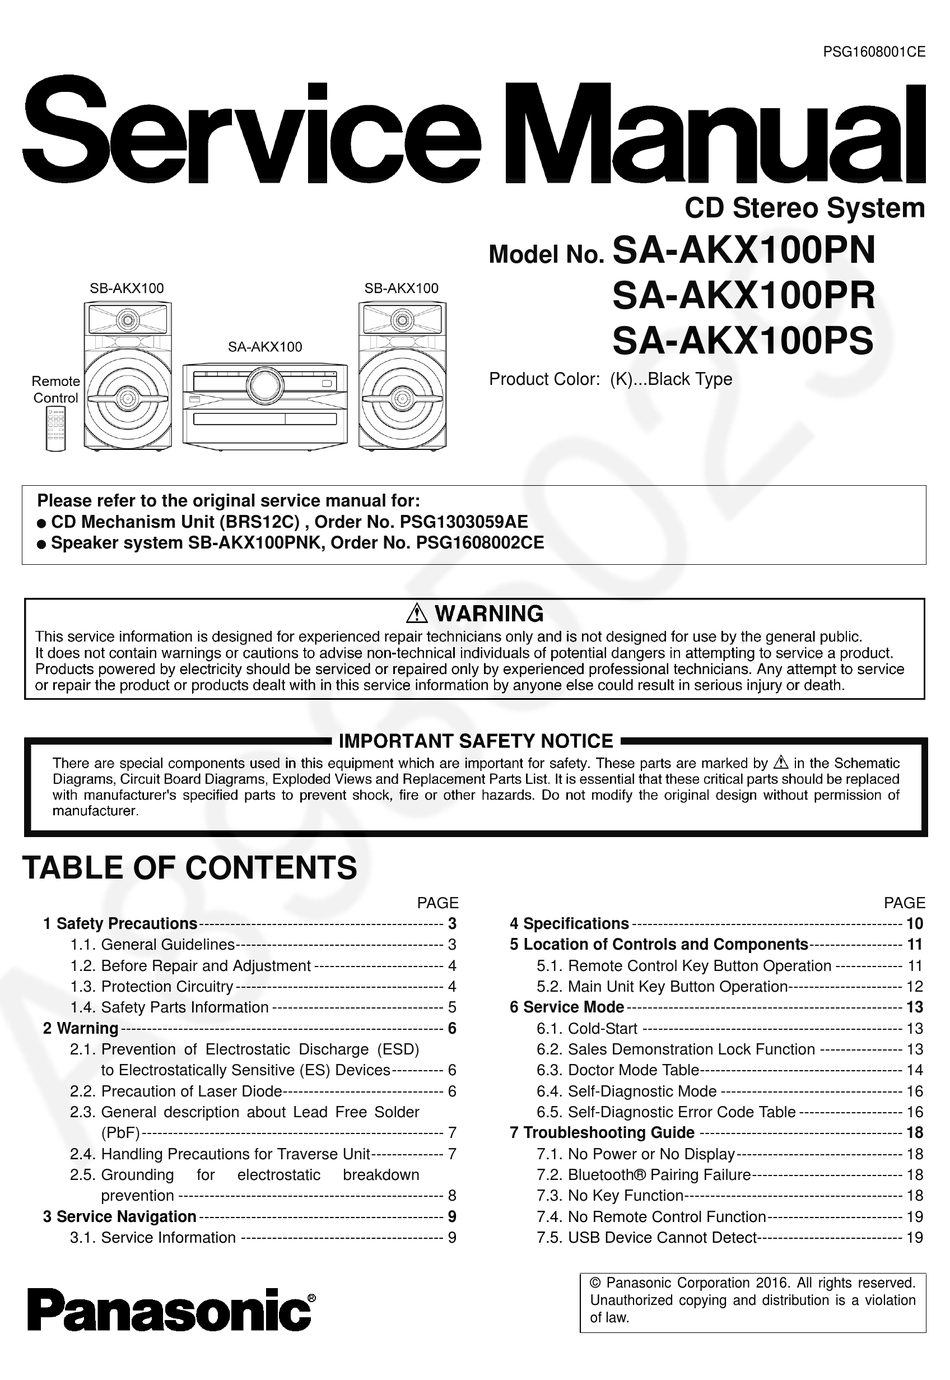 Panasonic Sa Akx100pn Service Manual Pdf Download Manualslib